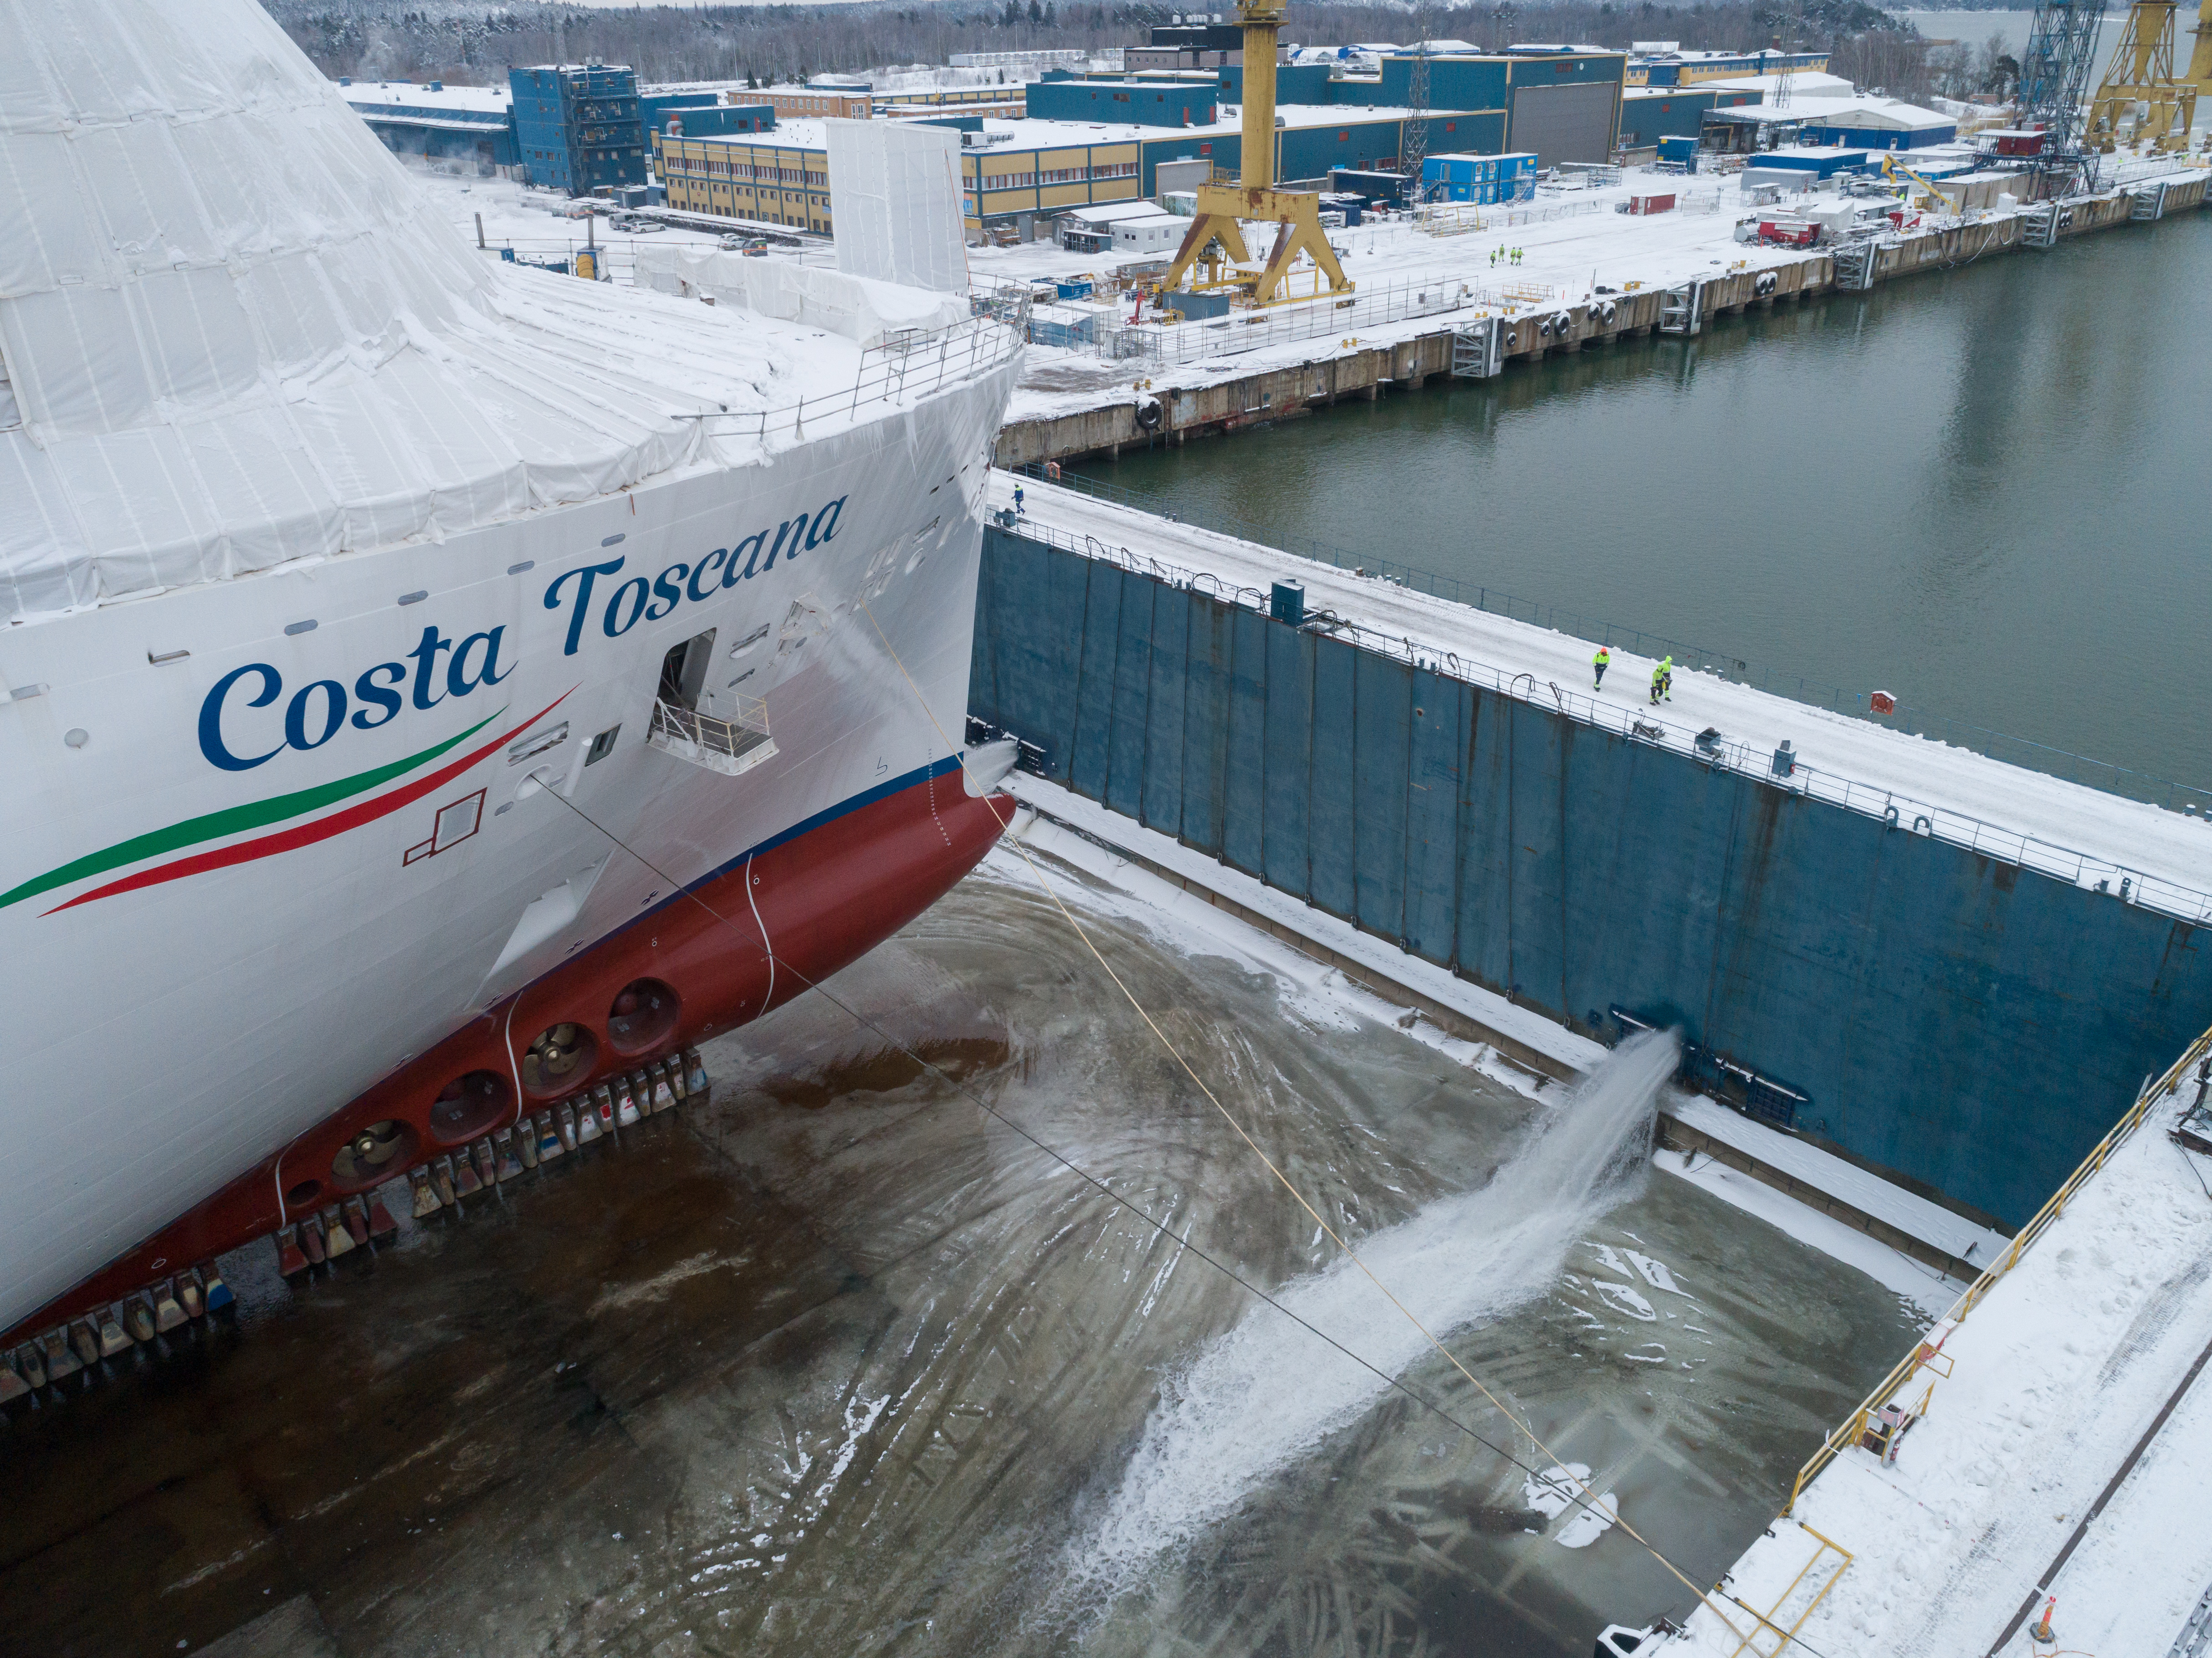 Costa toscana. Costa Toscana лайнер. Costa Toscana New ship 2021 5. Корабль Коста Тоскана. Costa Toscana лайнер 2021.